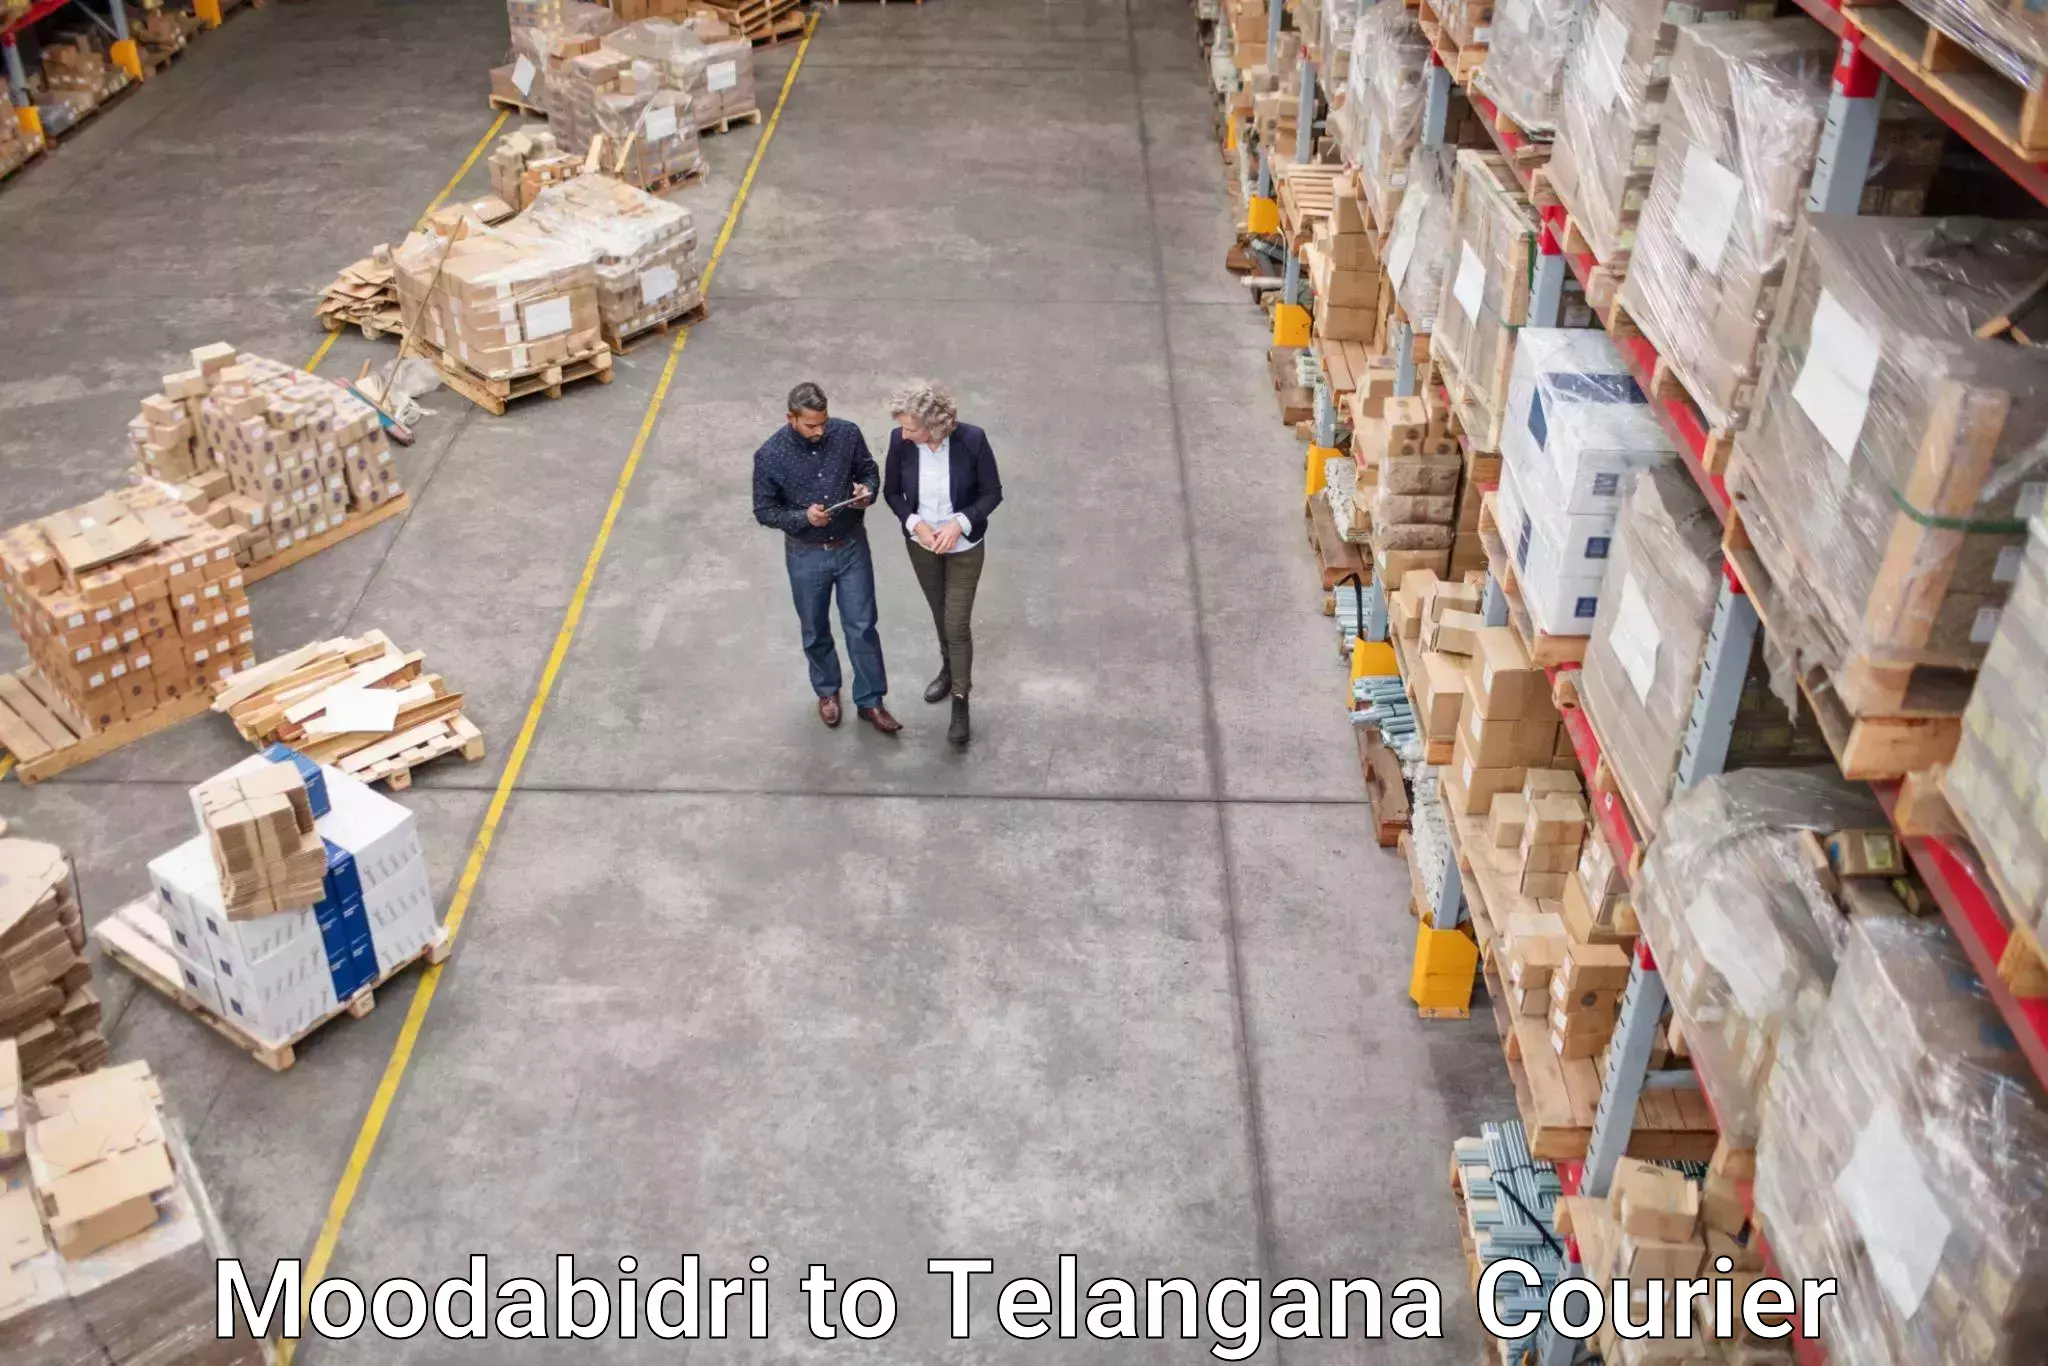 Pharmaceutical courier Moodabidri to Pregnapur